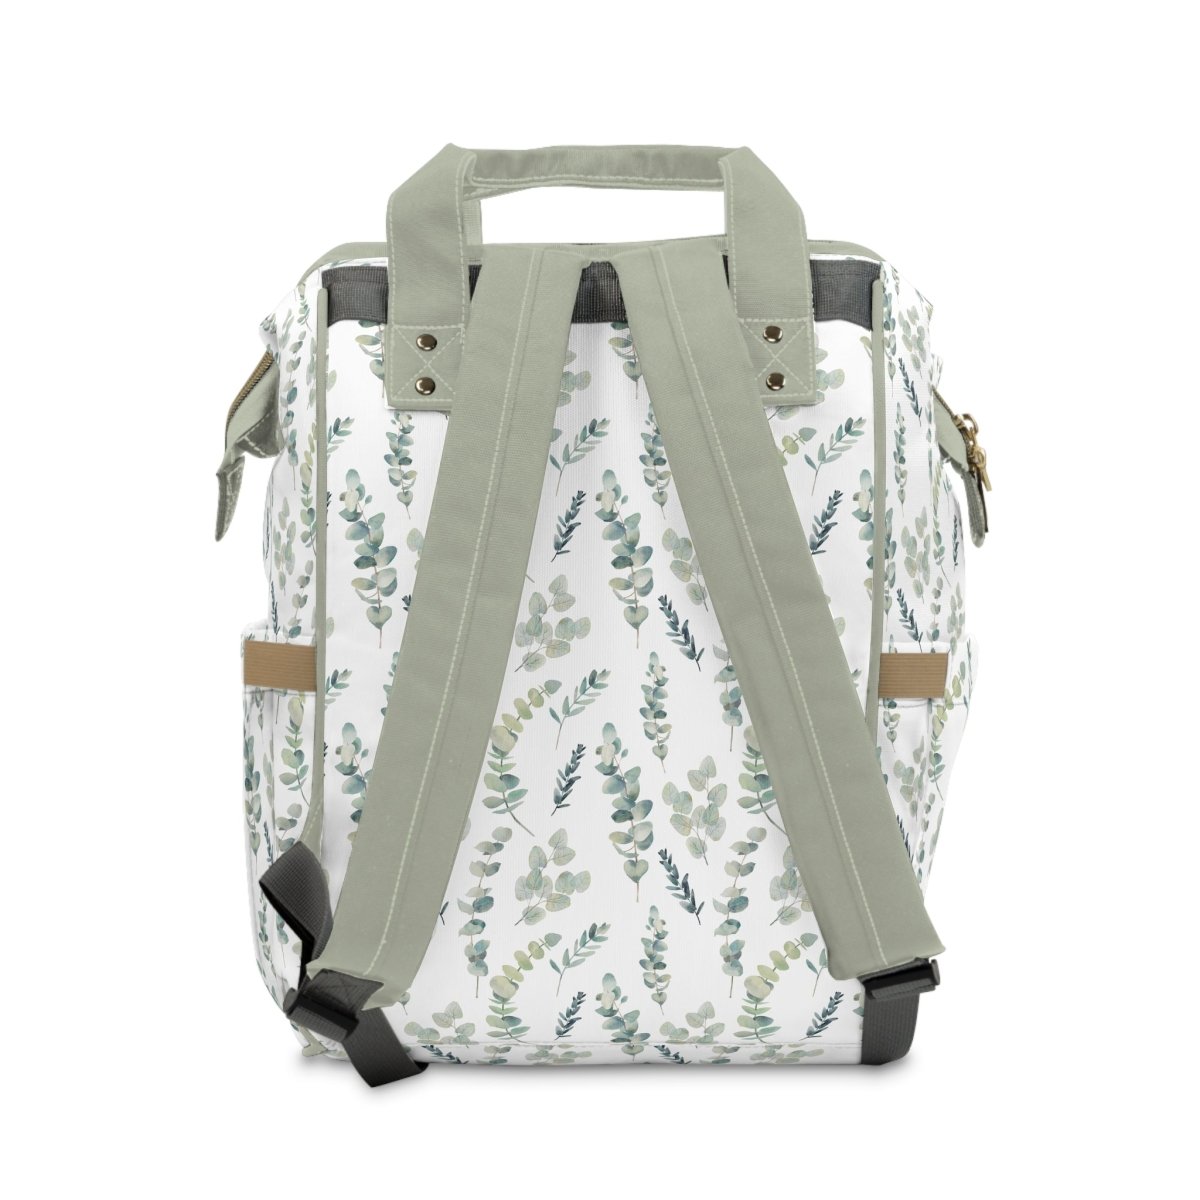 Going Green Personalized Backpack Diaper Bag - Diaper Bag